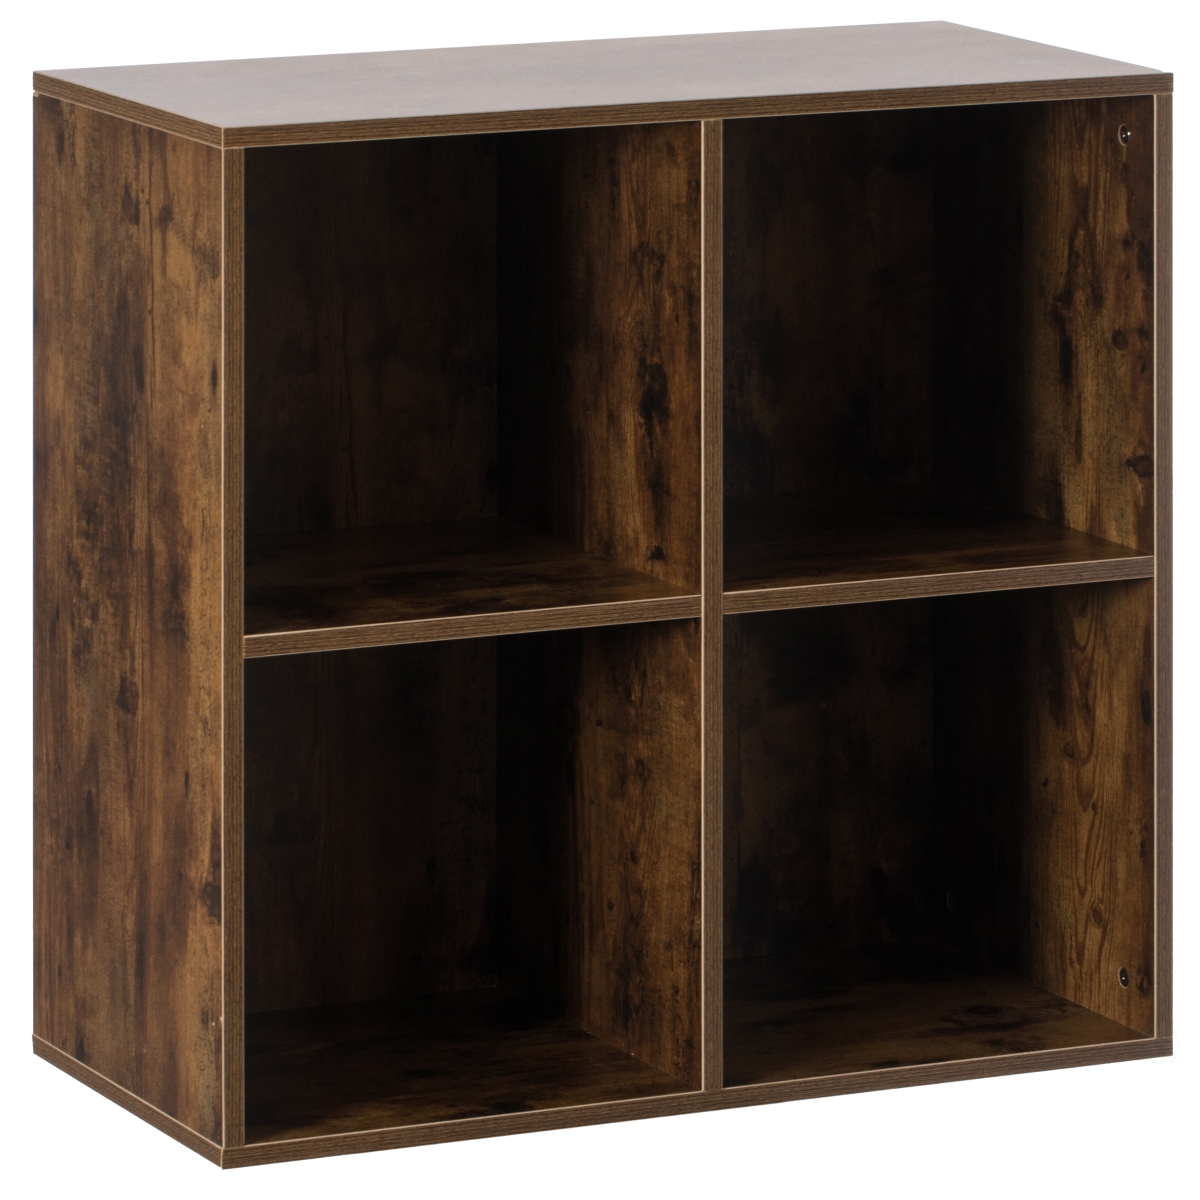 Picture of Basicwise QI004416.WN Modern Wooden Toy Storage Bookshelf 4 Cube Organizer Square Bookcase&#44; Walnut